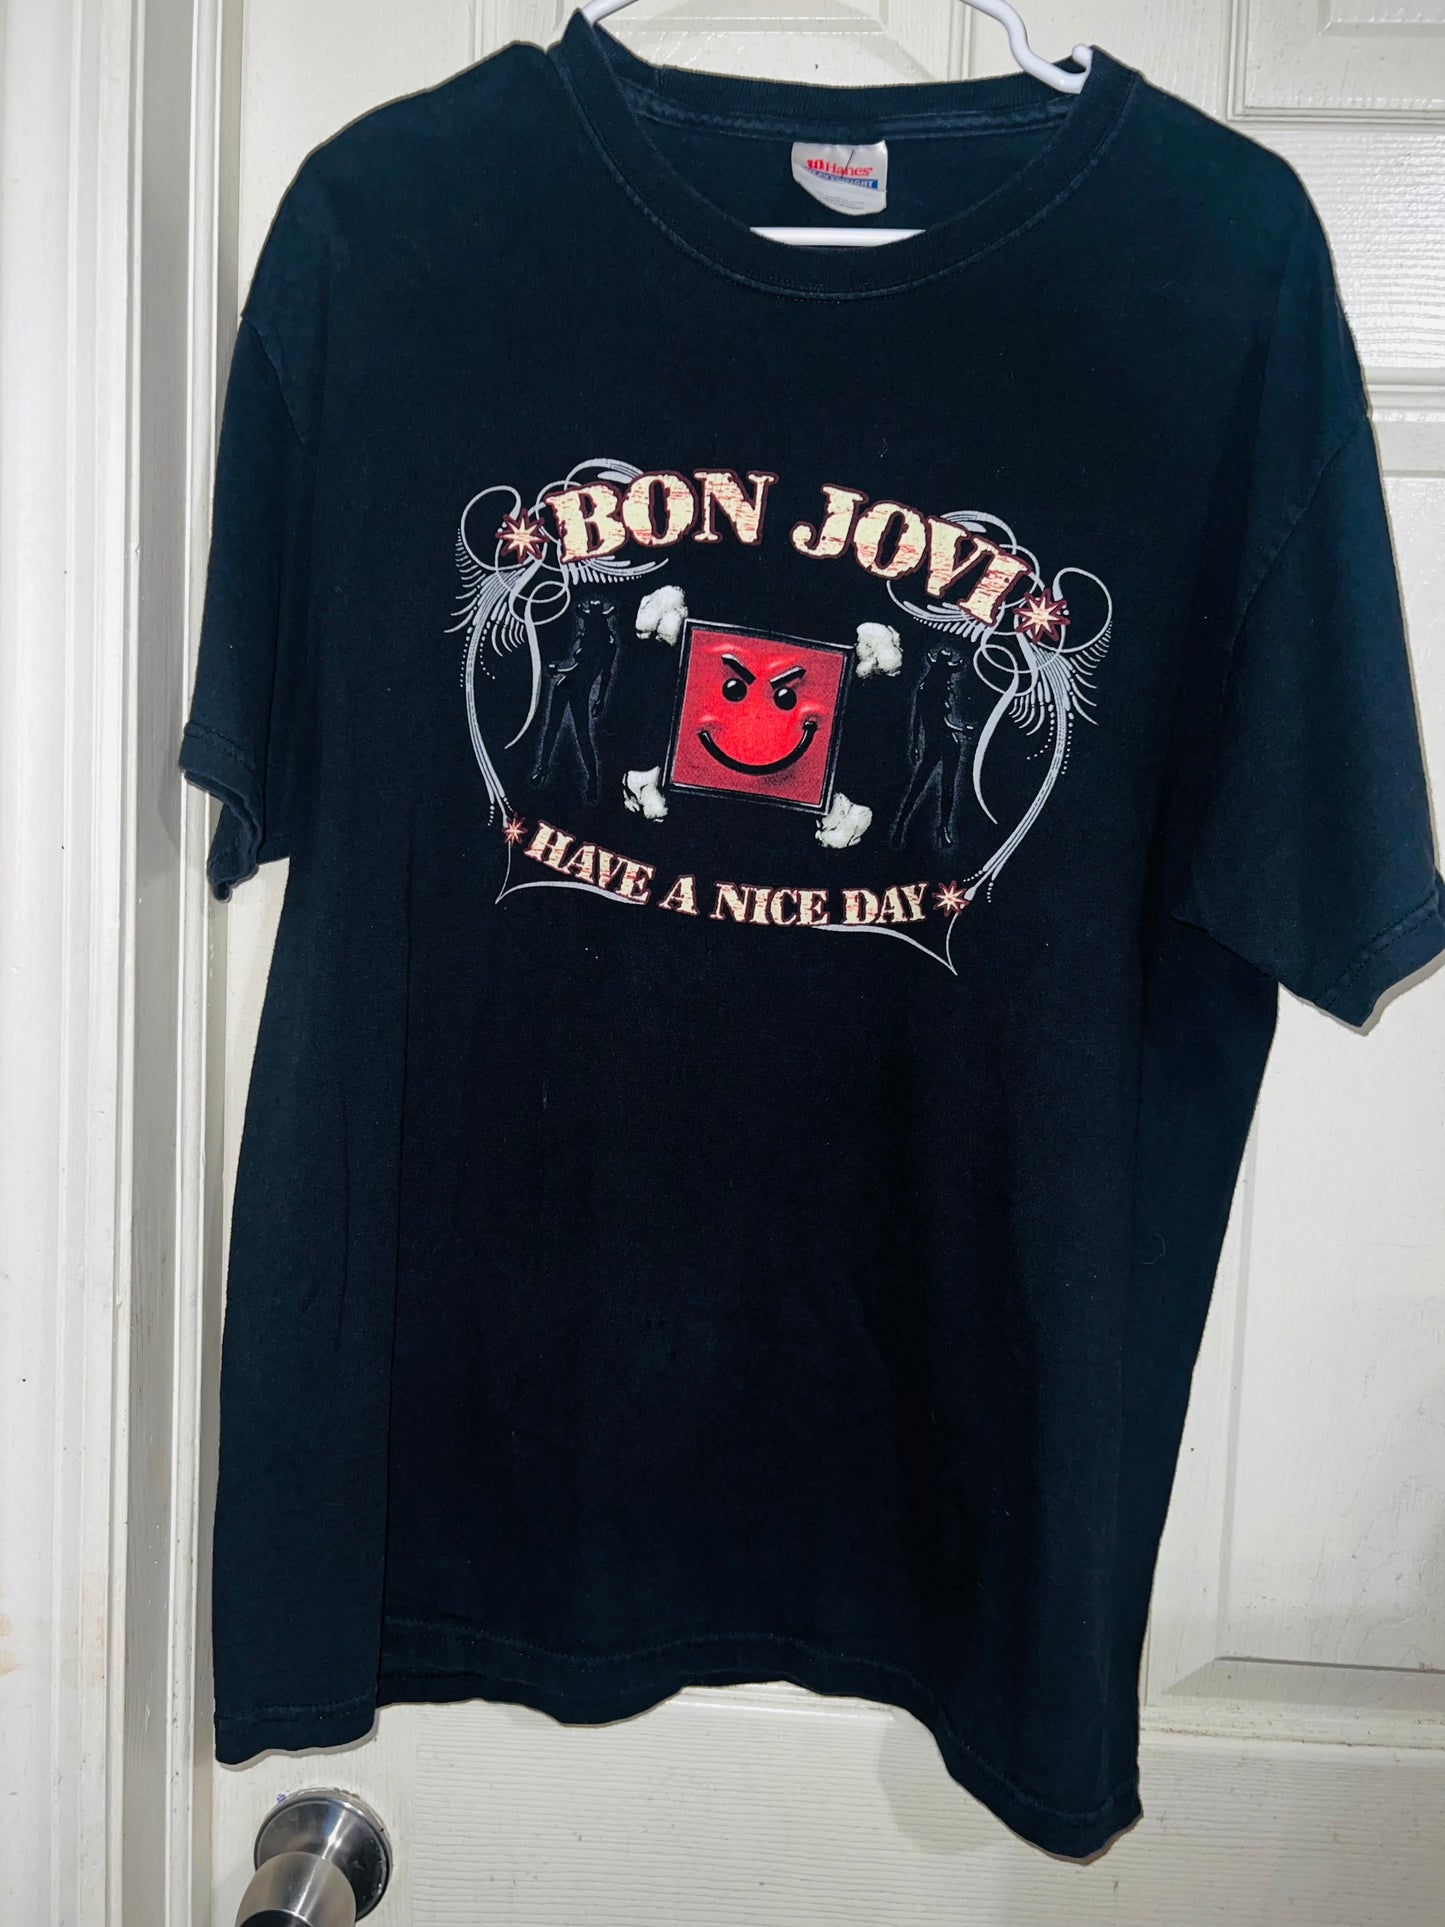 Bon Jovi Vintage Double Sided Tour Tee